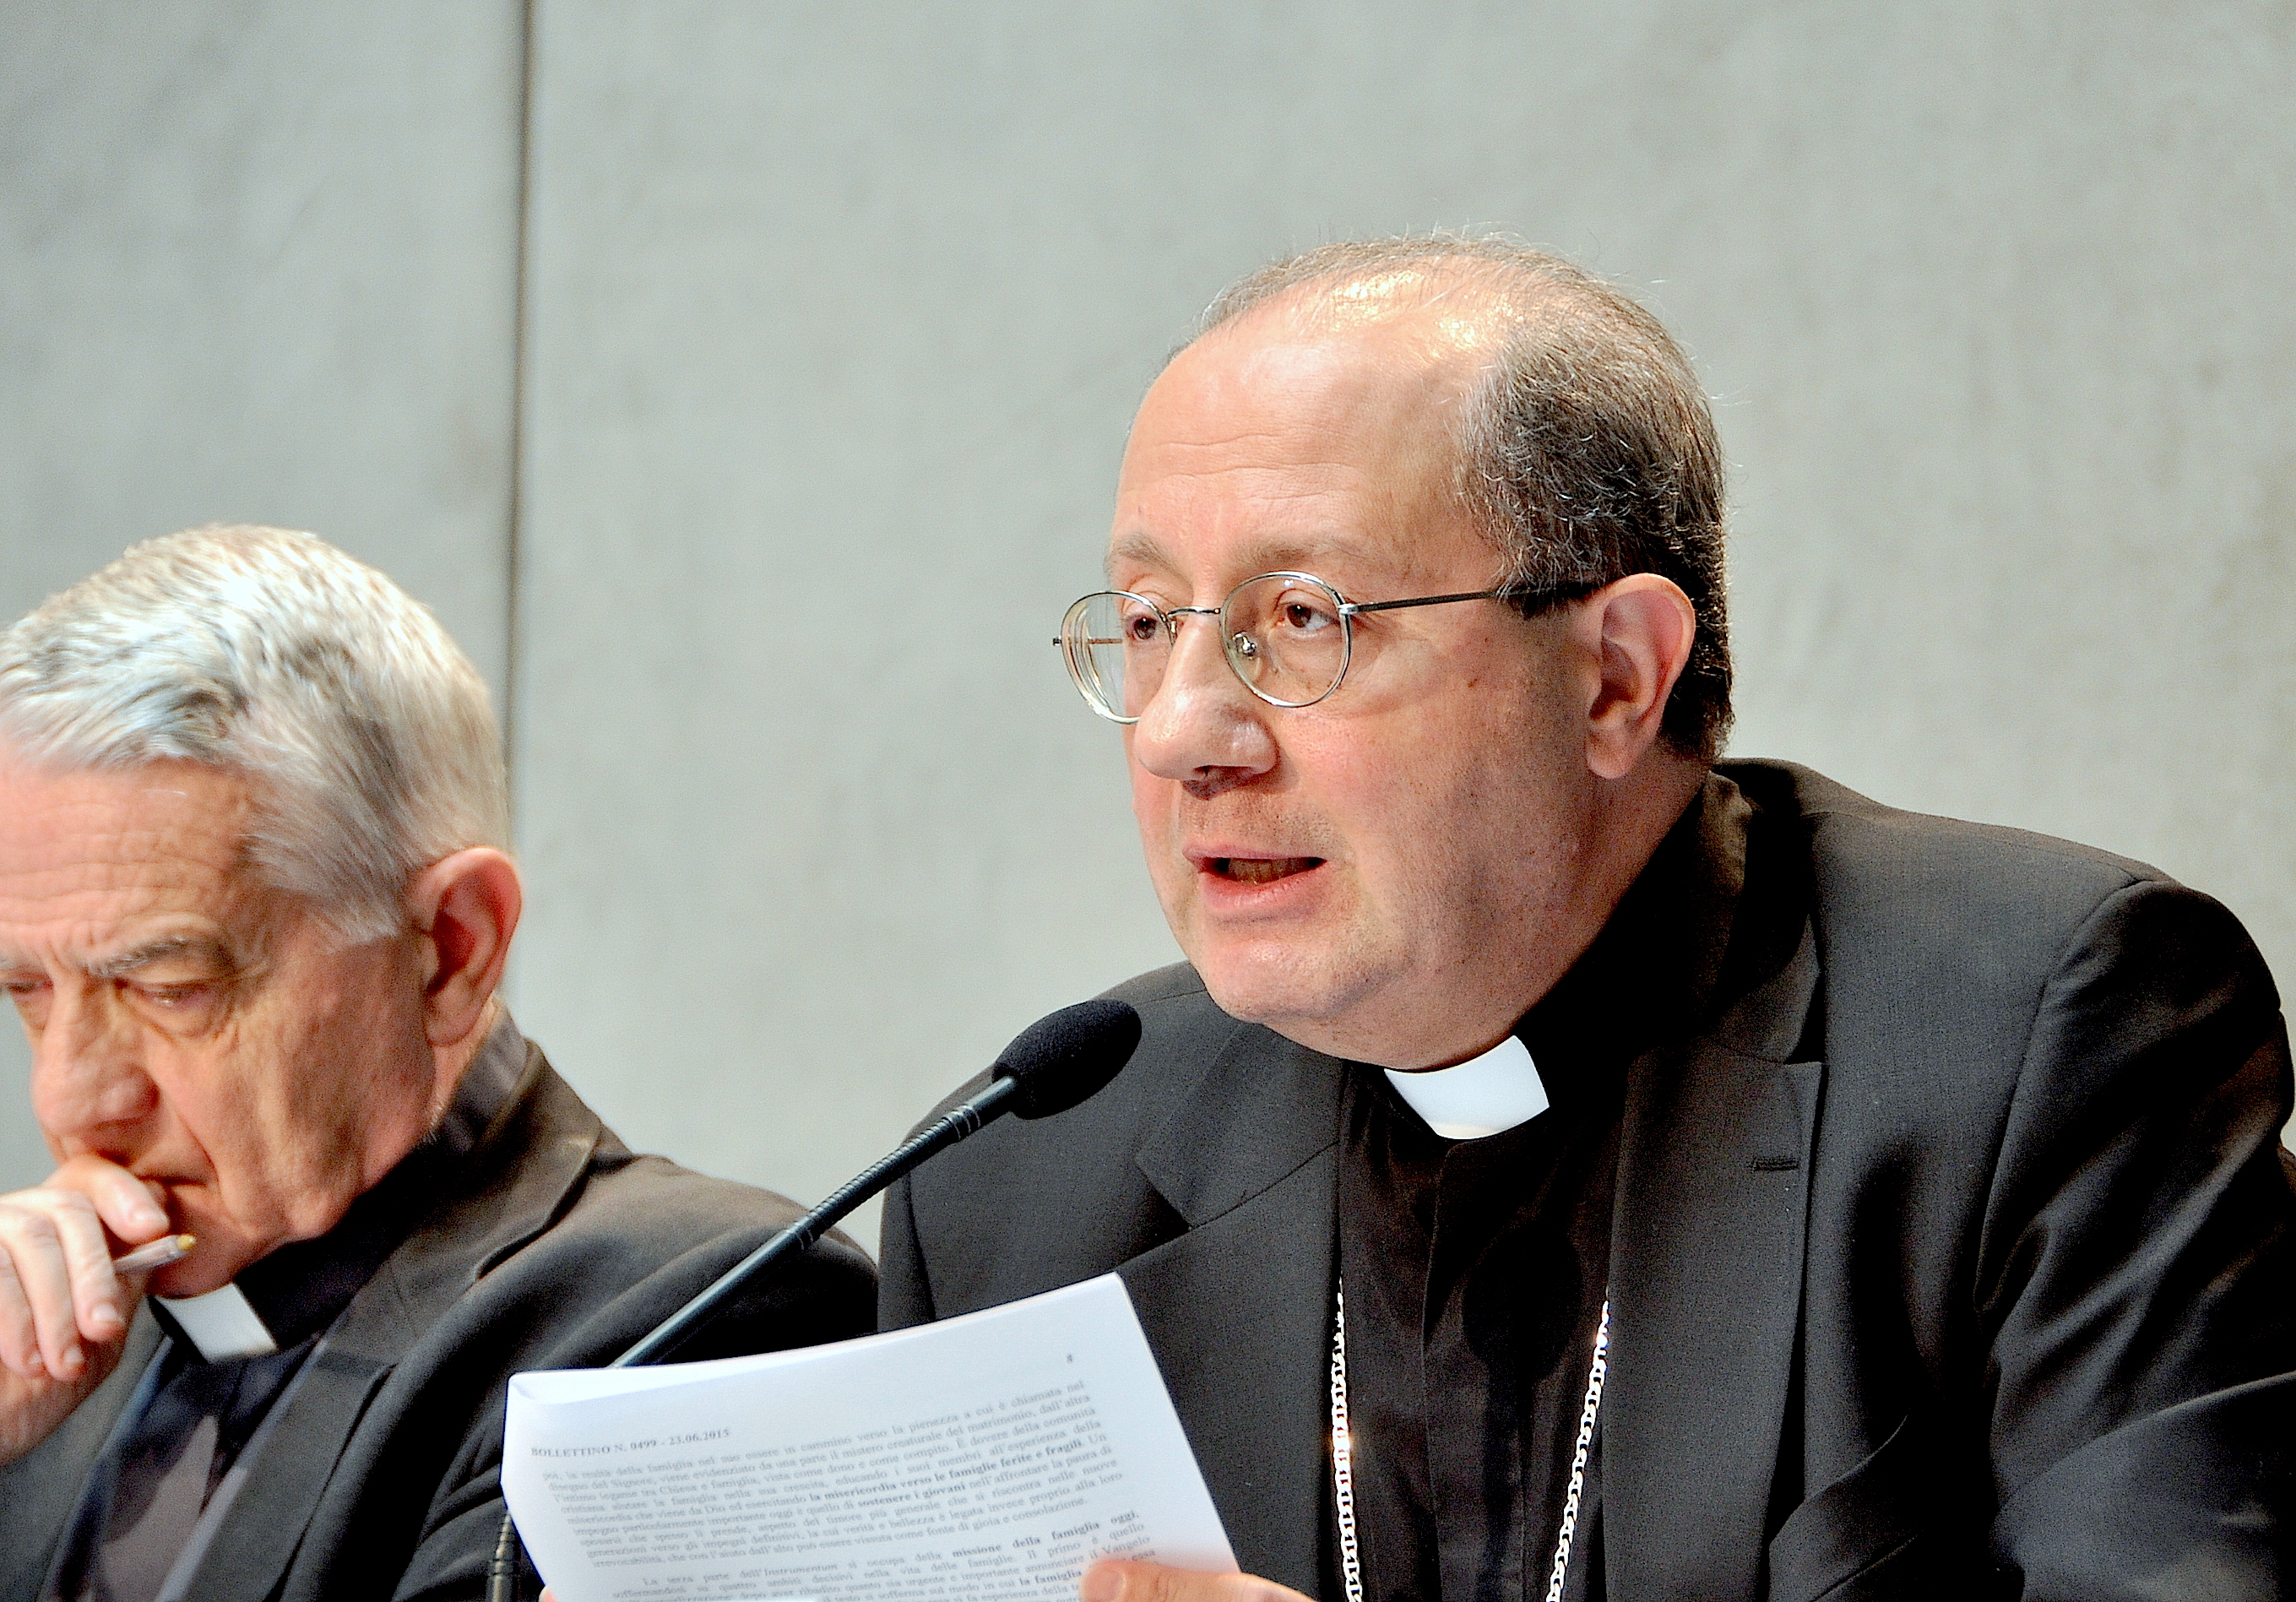 Mons. Bruno Forte during the presentation of instrumentum laboris in the vatican press room - 23 June 2015